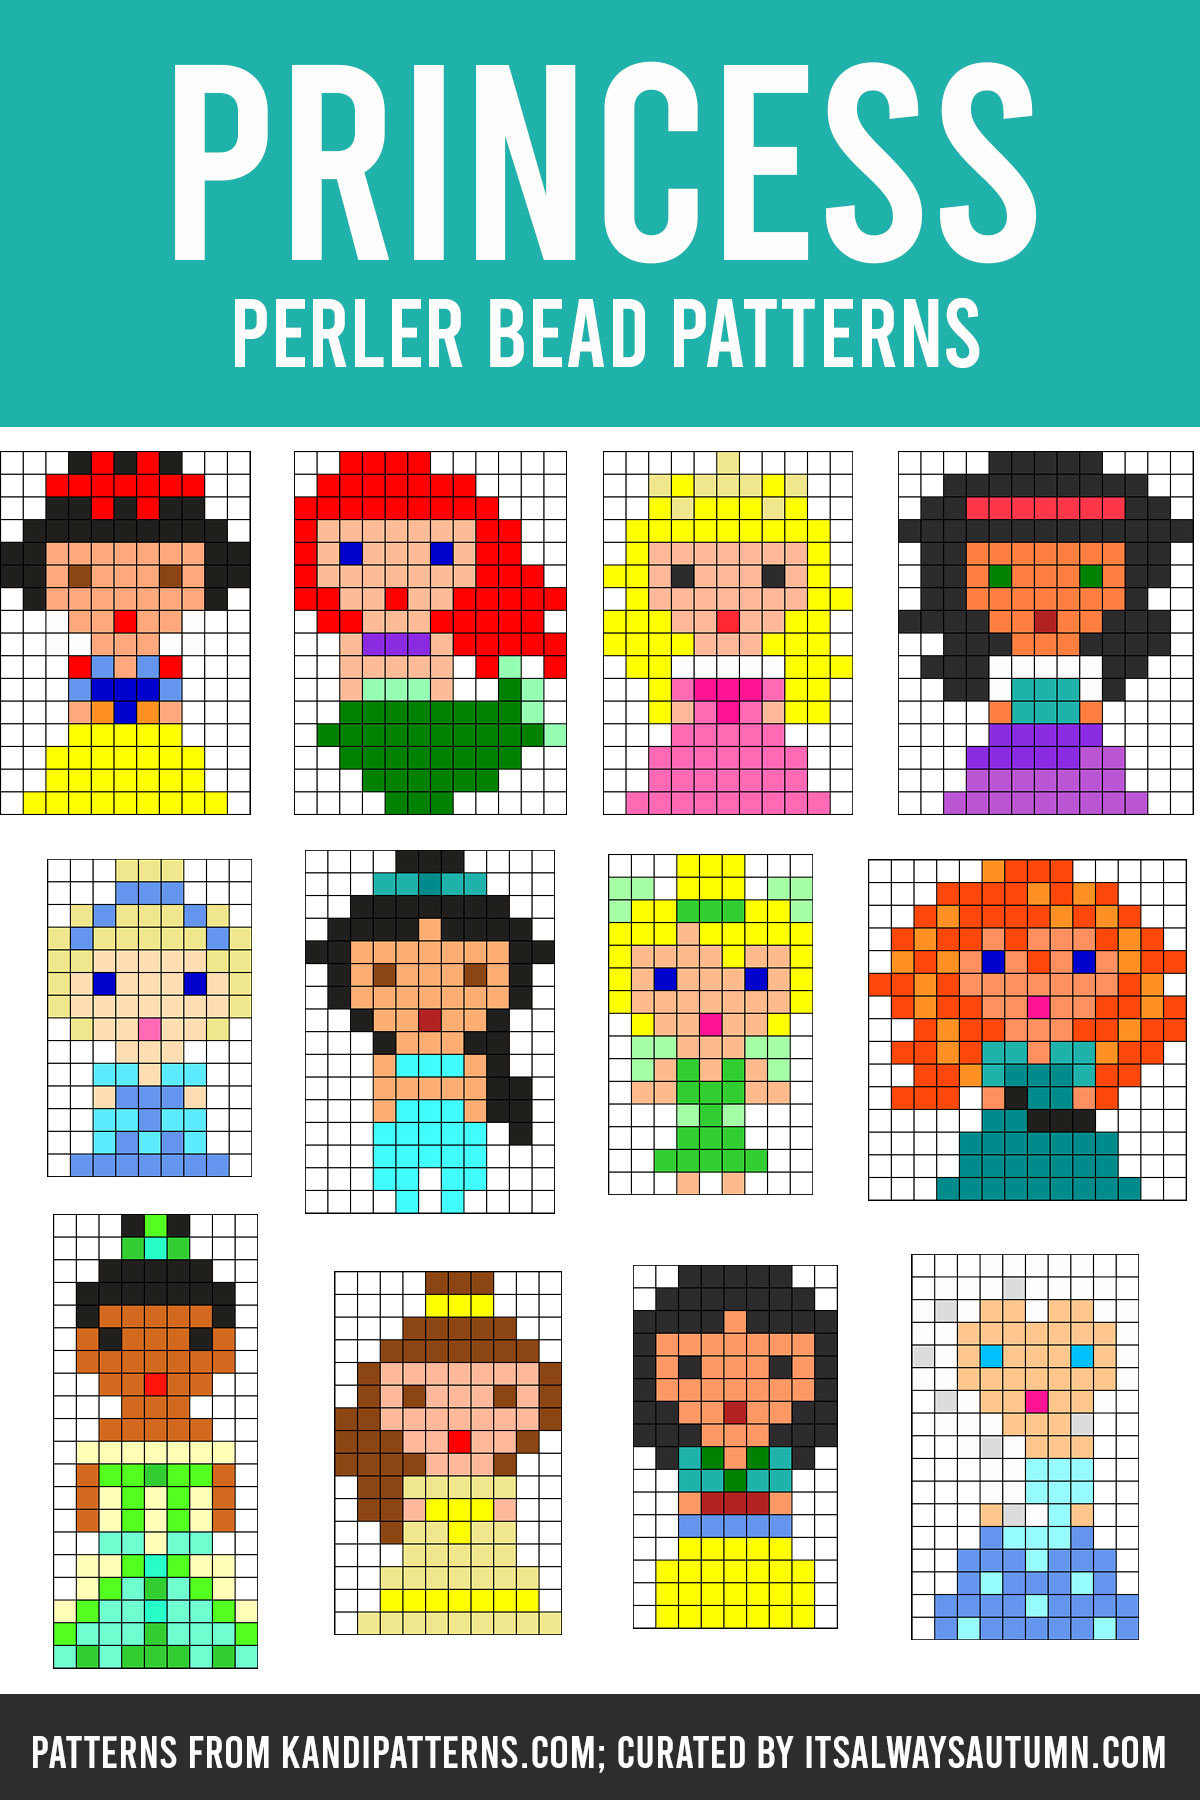 Disney princess Perler bead patterns